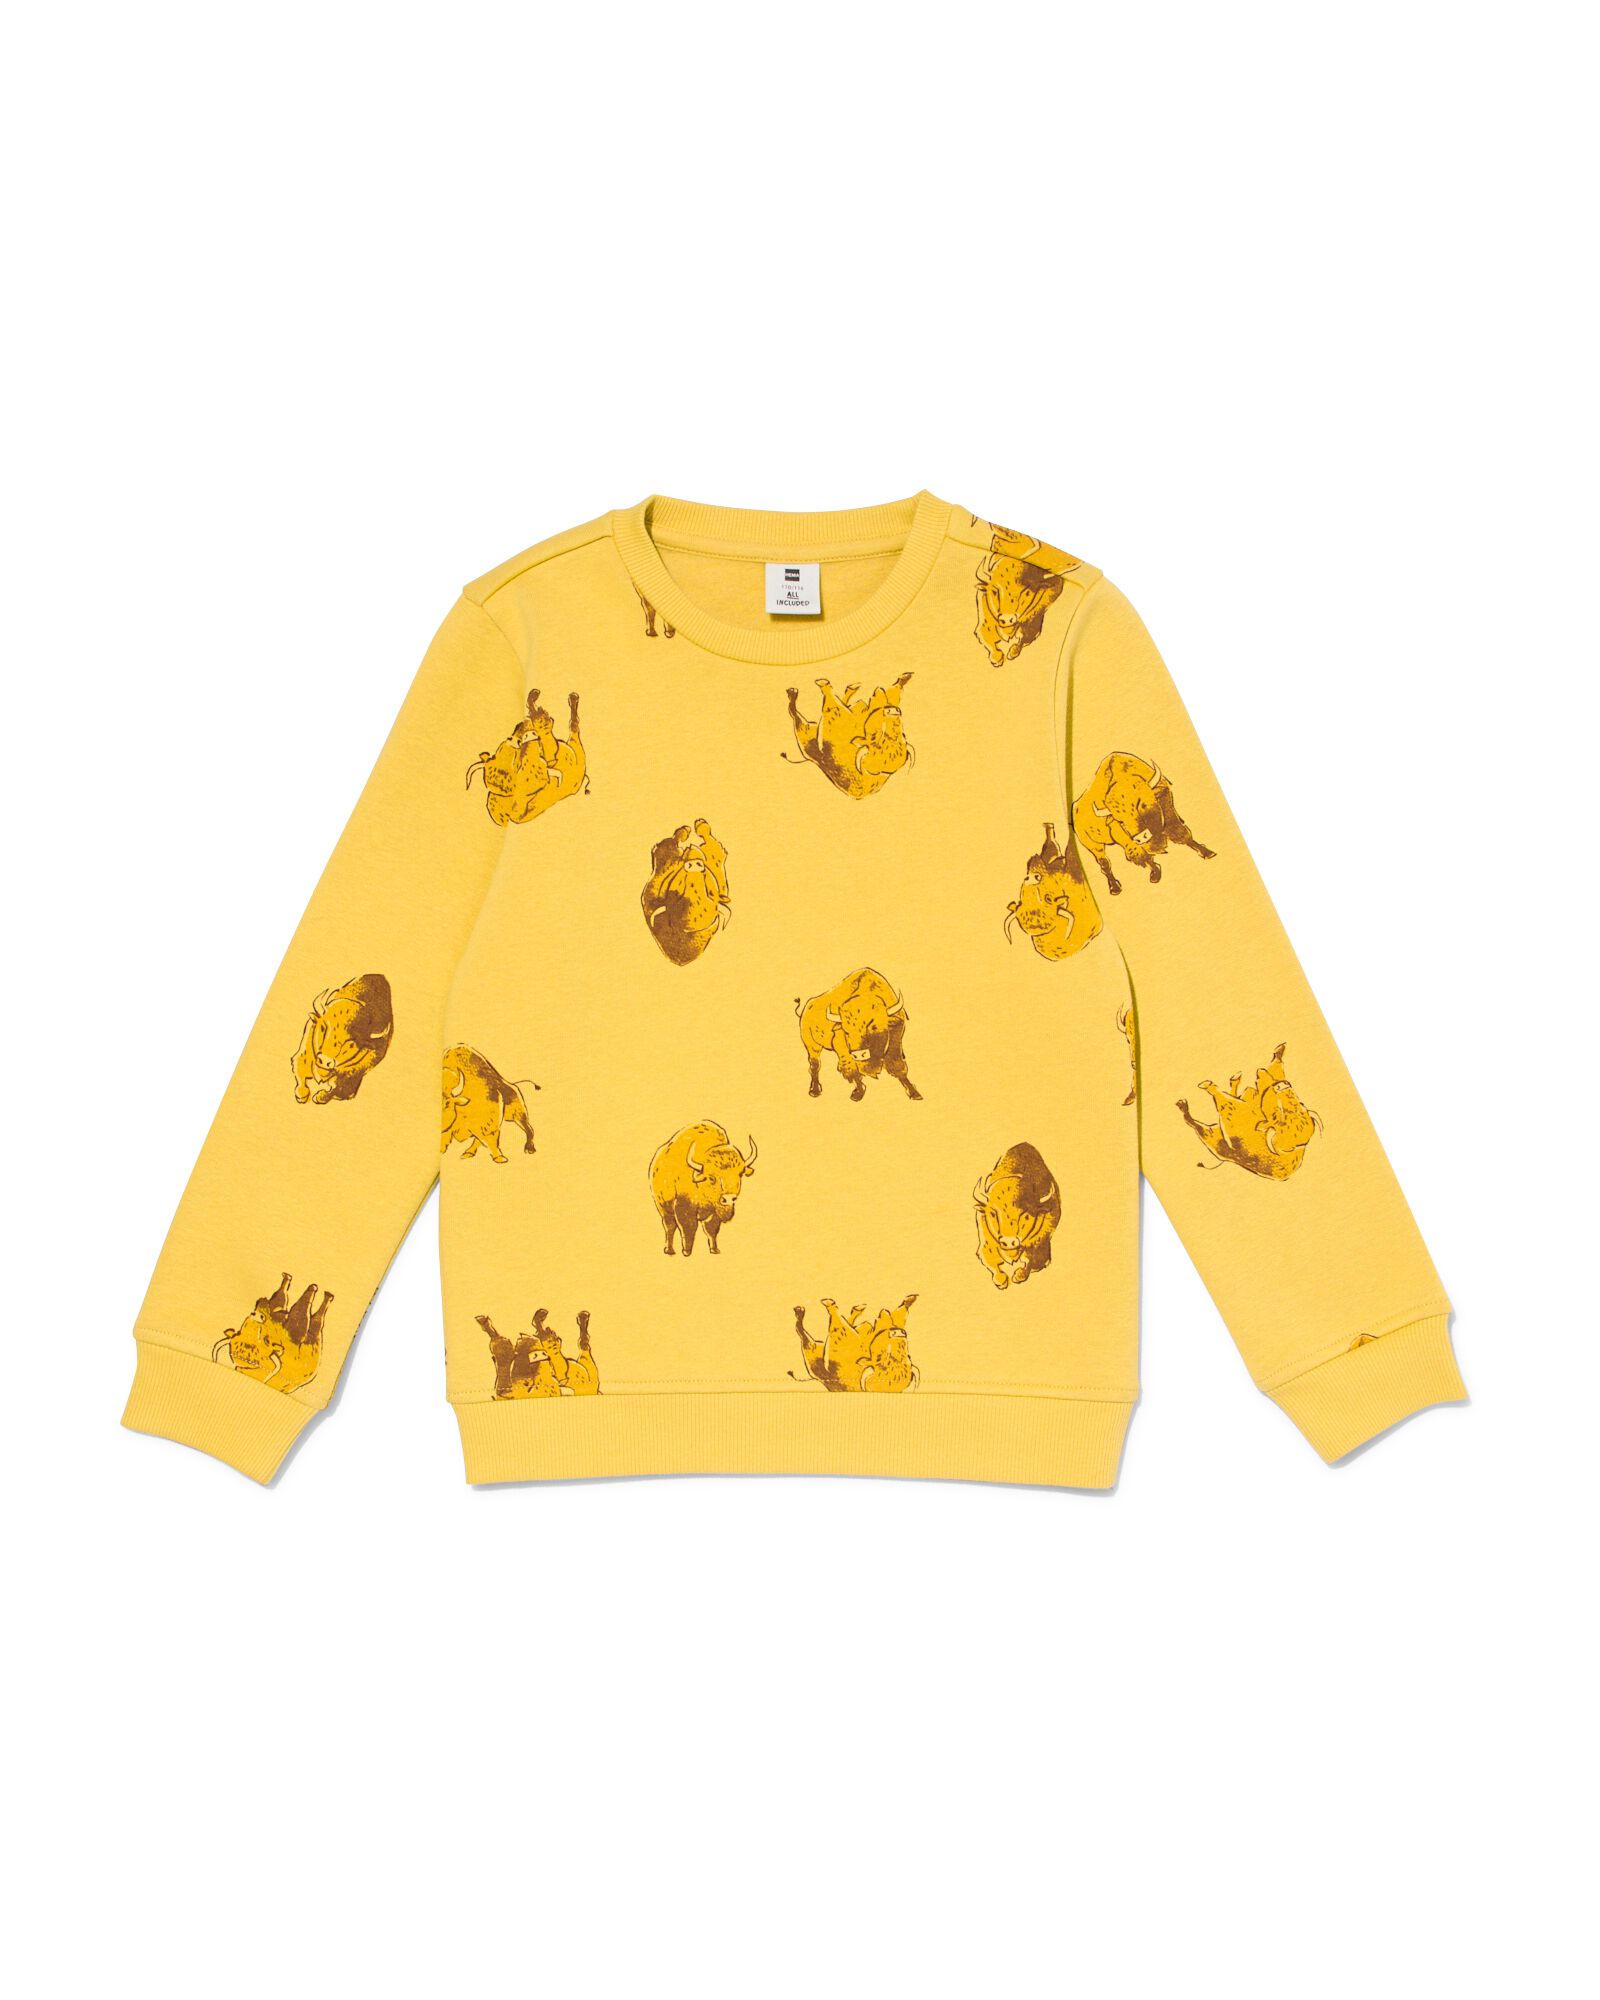 kinder sweater bizon geel 86/92 - 30770841 - HEMA